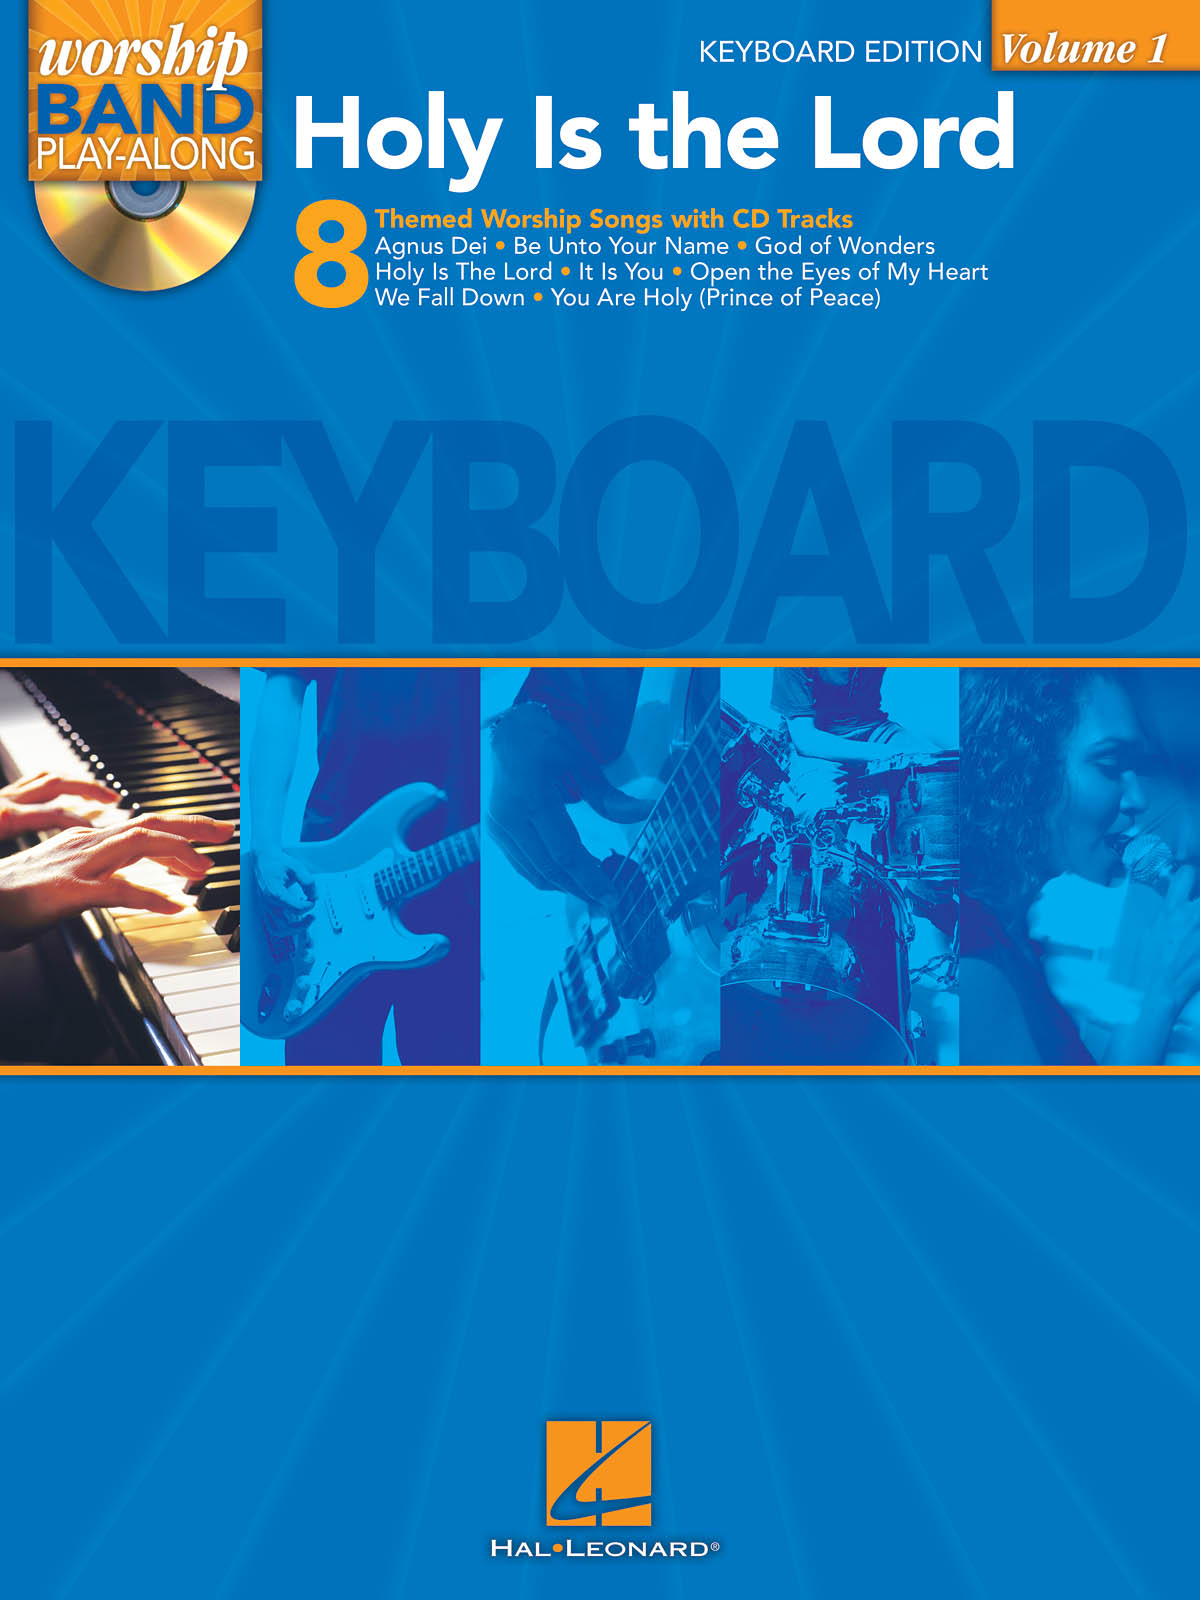 Holy is the Lord - Keyboard Edition - Worship Band Playalong Volume 1 - pro keyboard